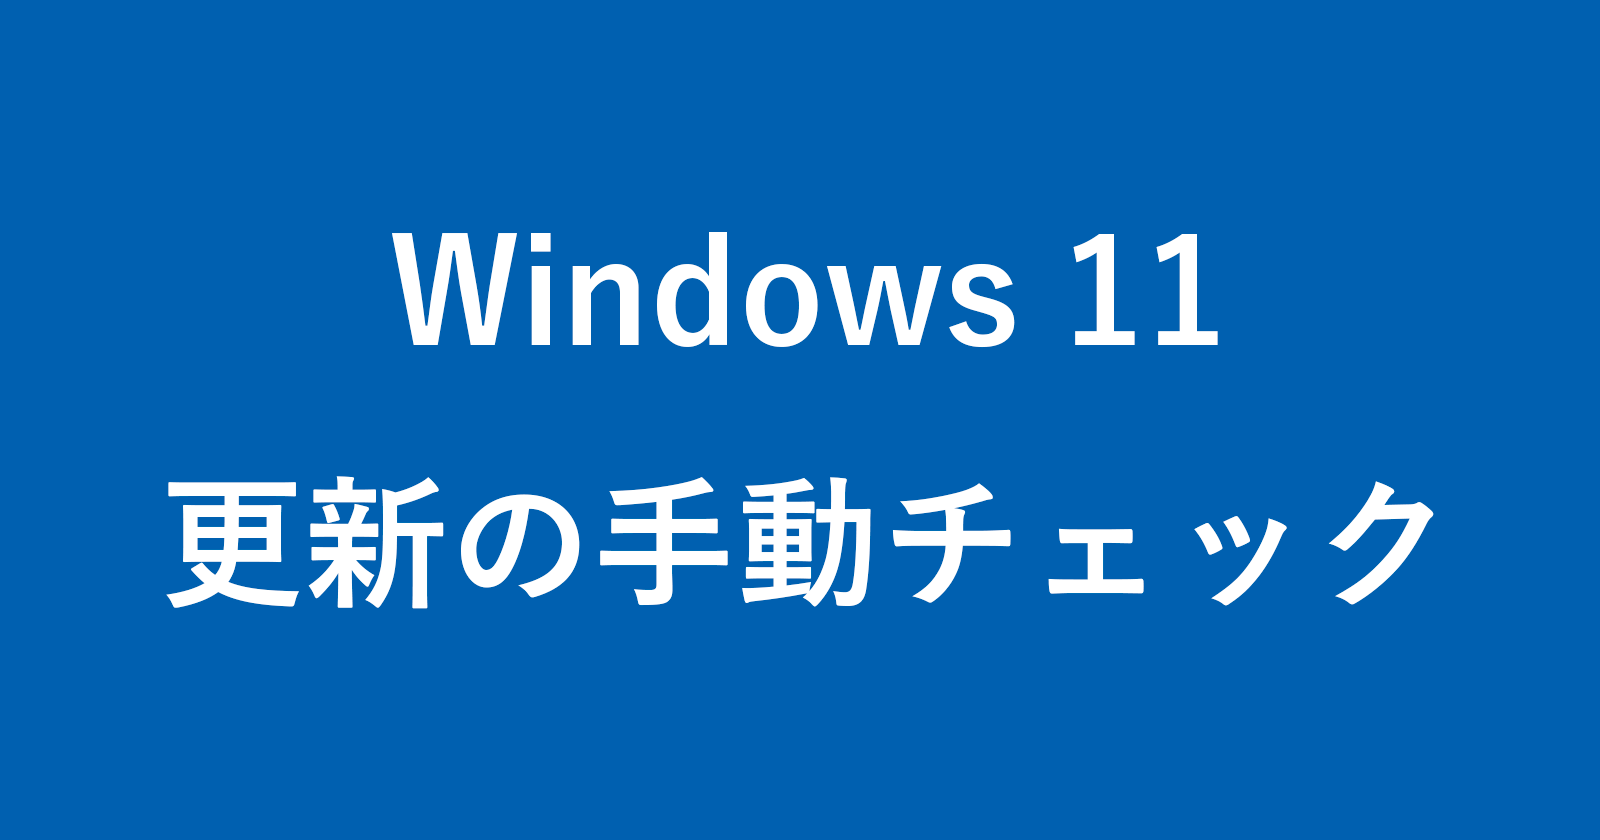 windows 11 manually update check